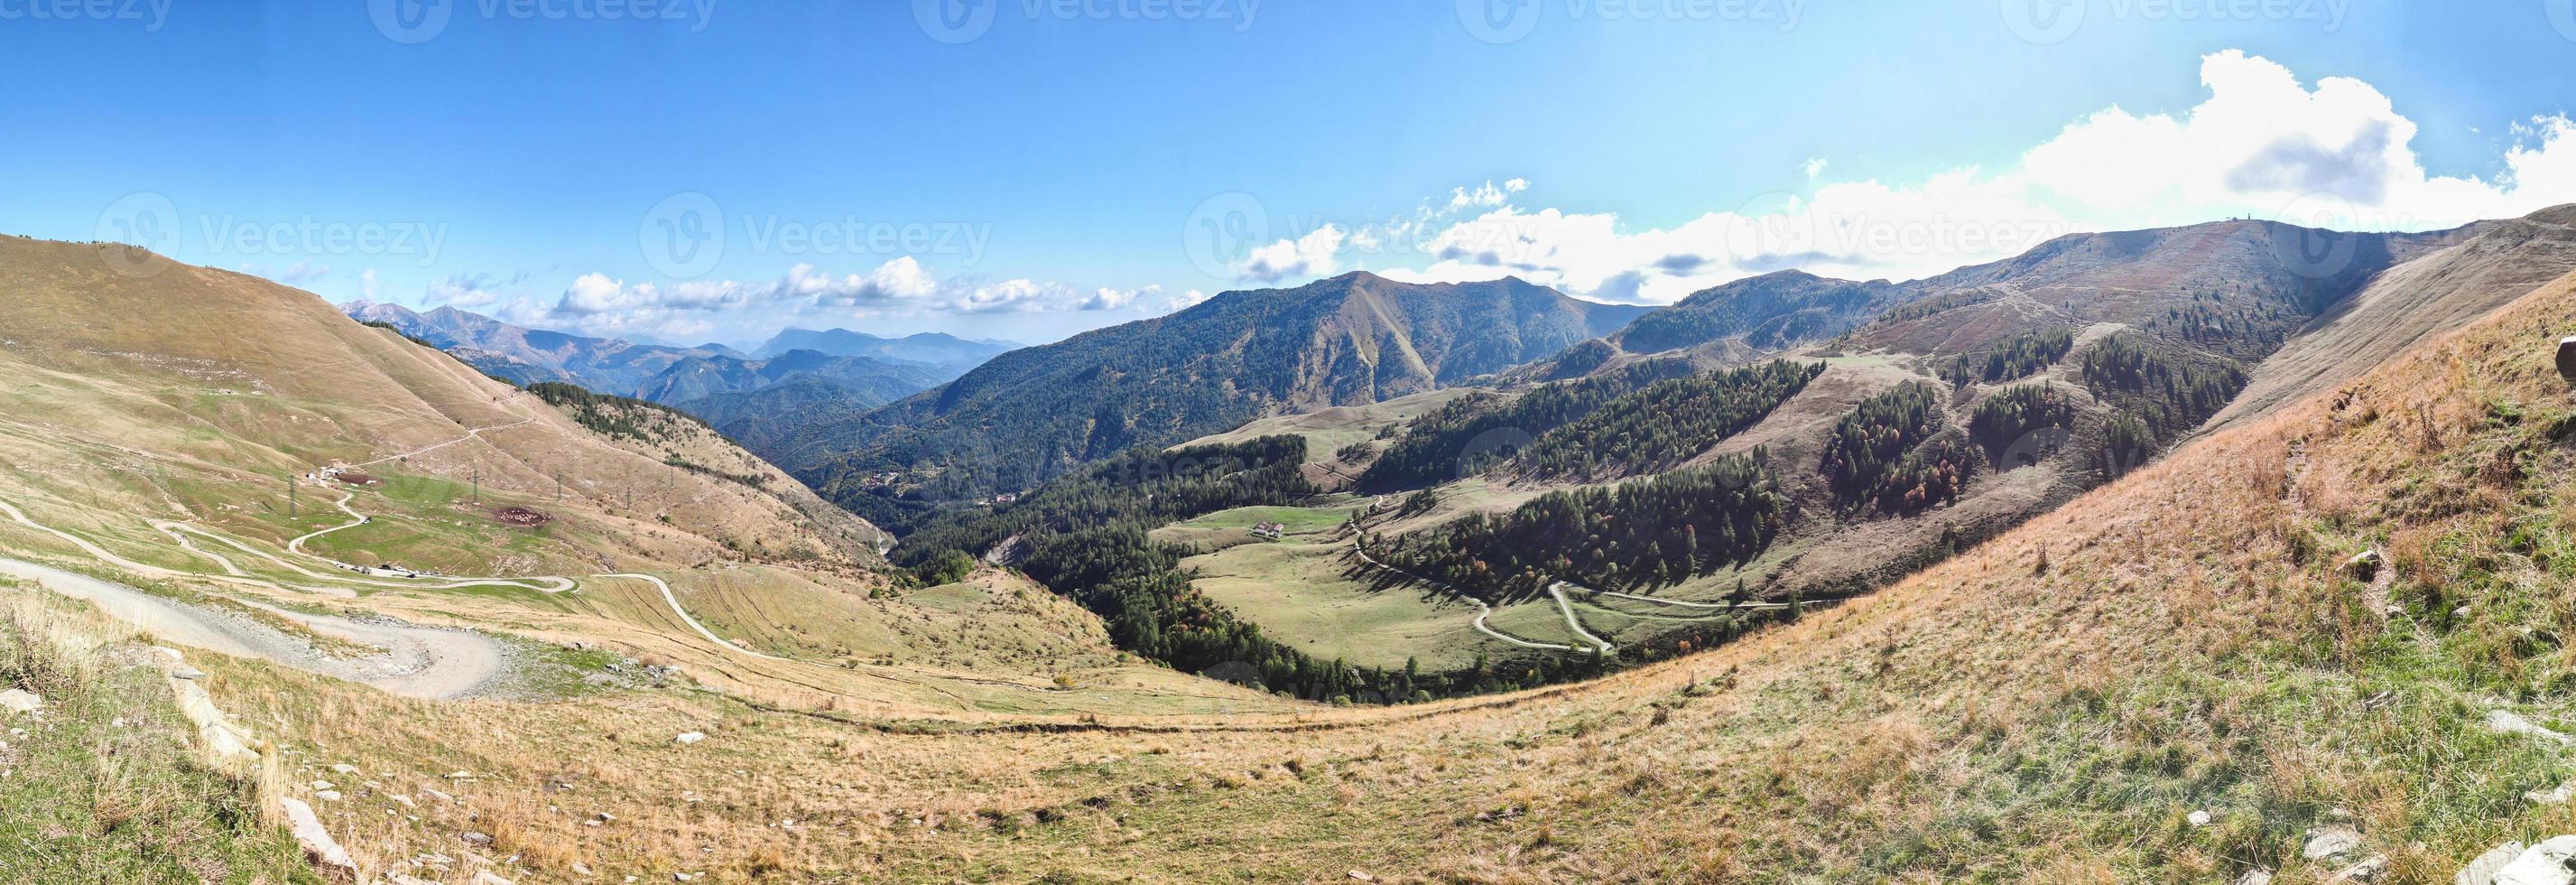 stort landskap av de liguriska alperna i monte saccarello foto